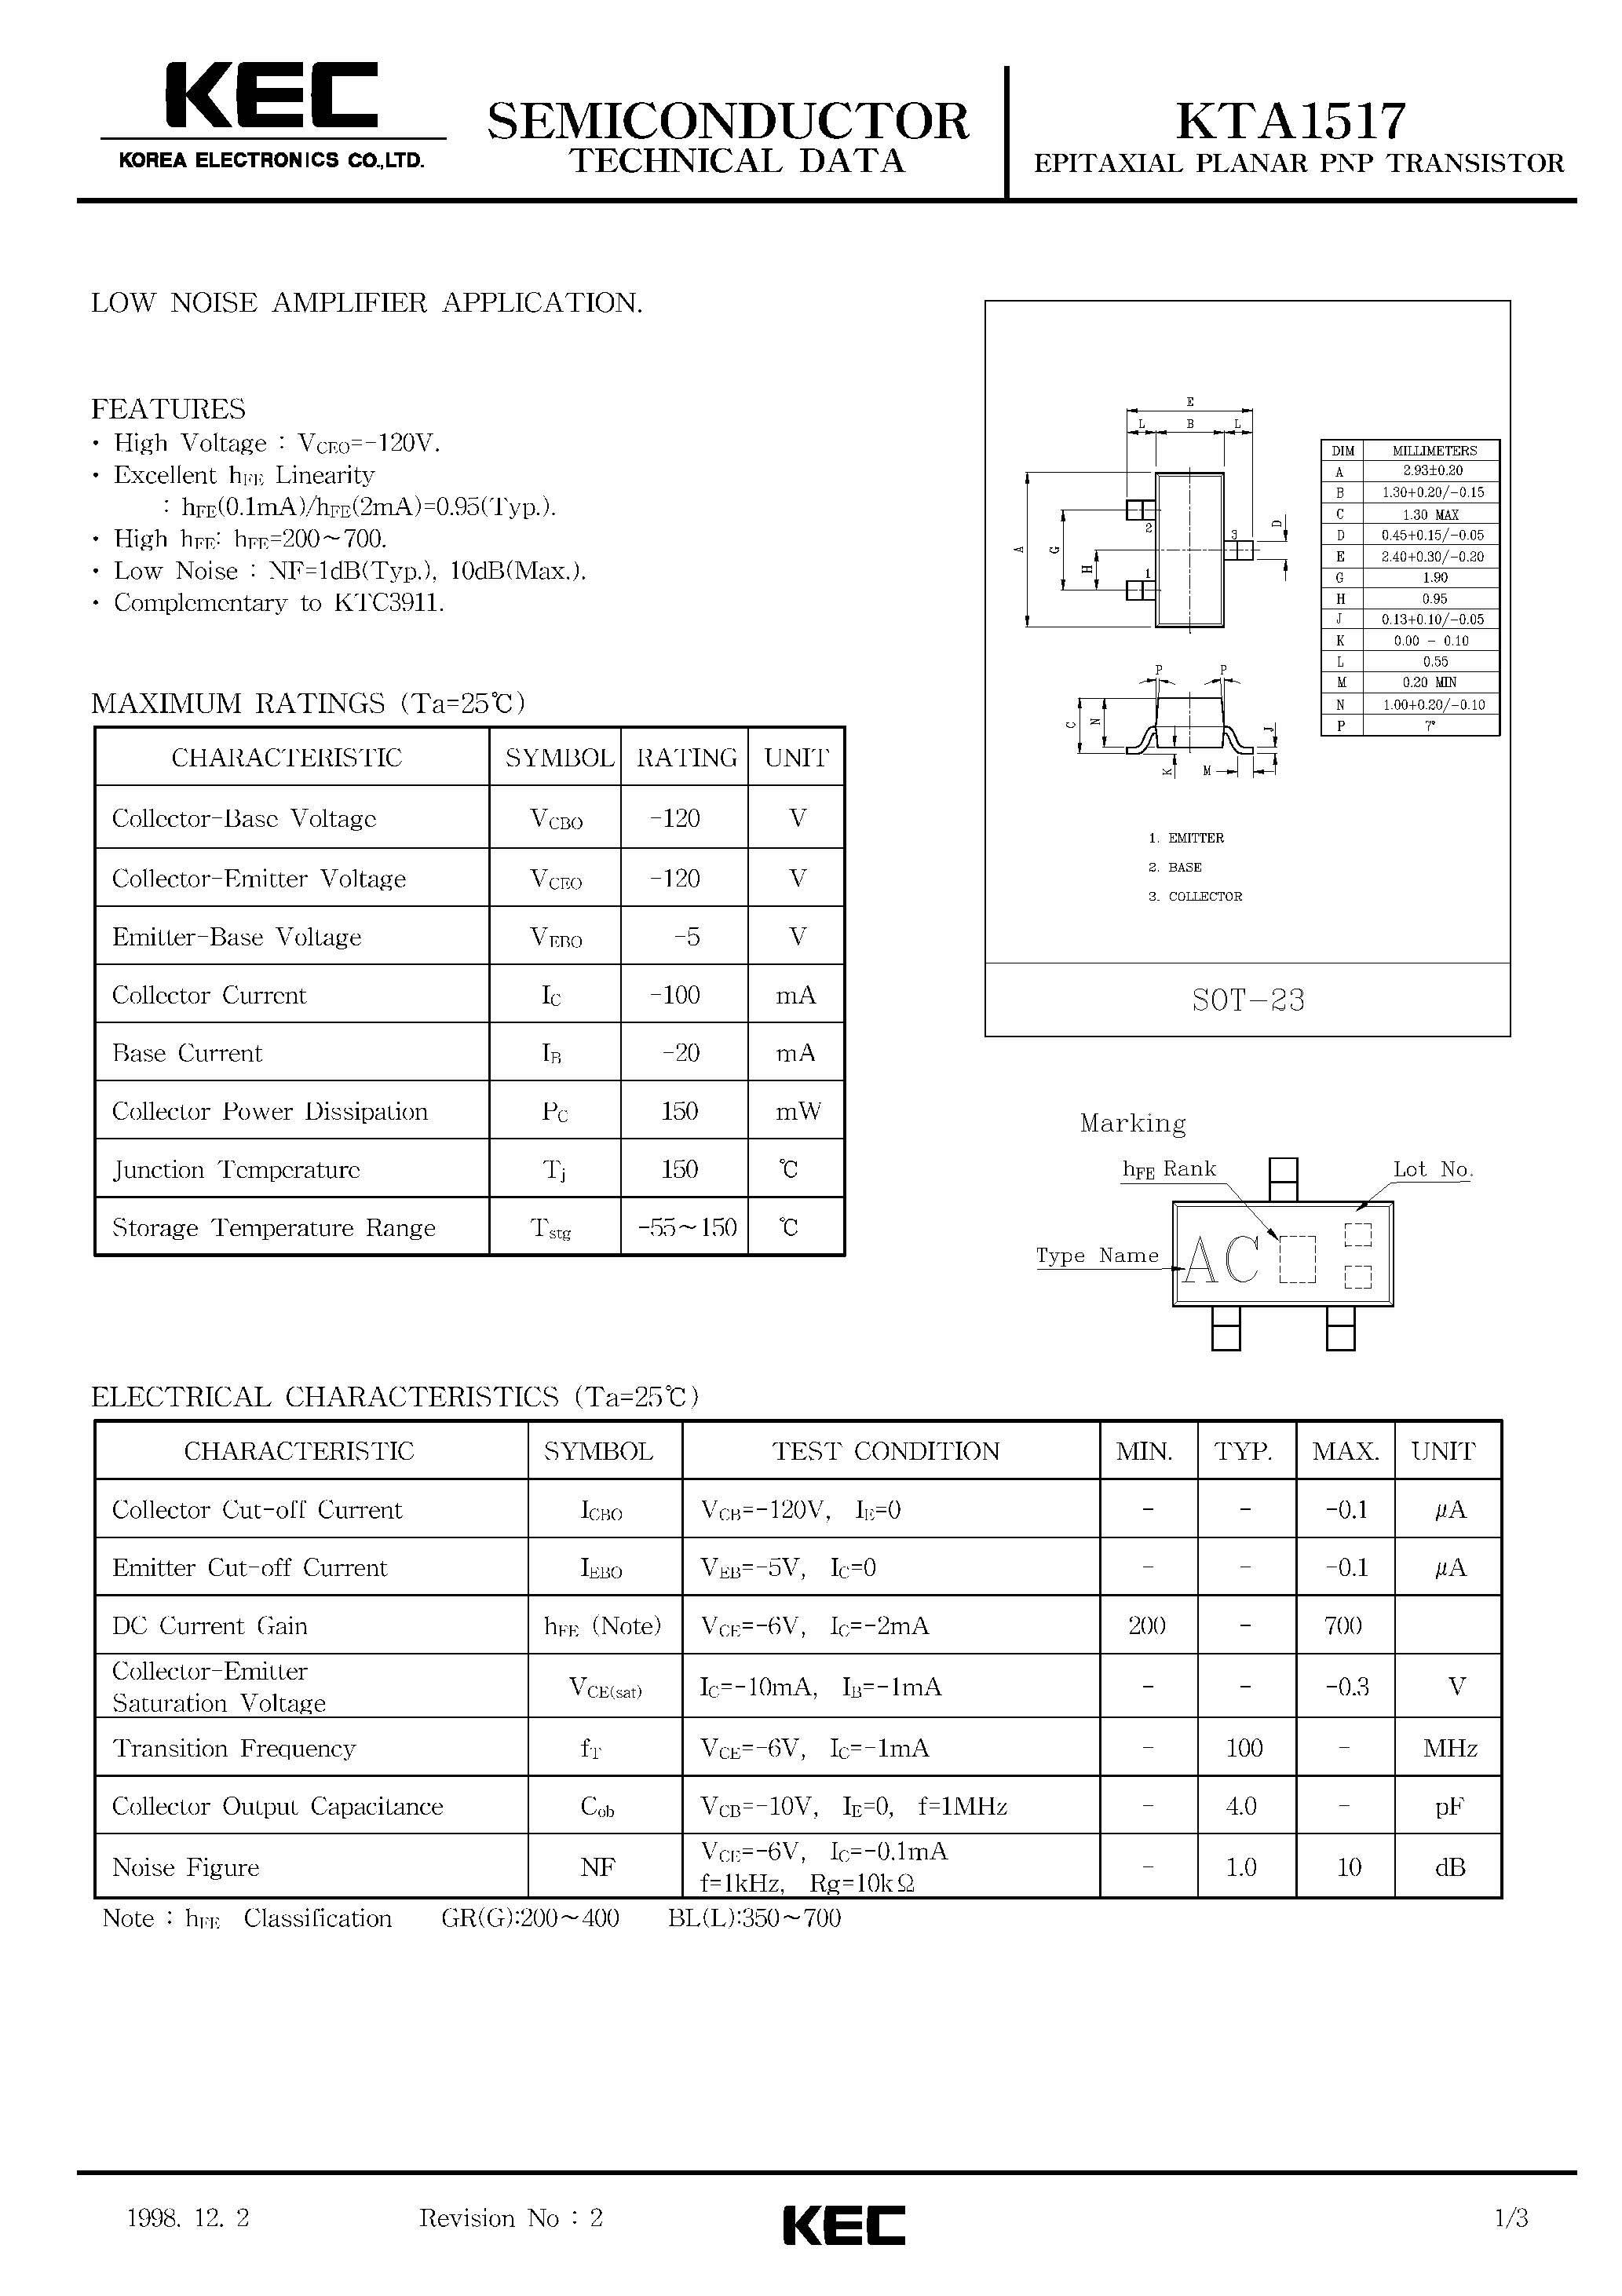 Datasheet KTA1517 - EPITAXIAL PLANAR PNP TRANSISTOR (LOW NOISE AMPLIFIER) page 1